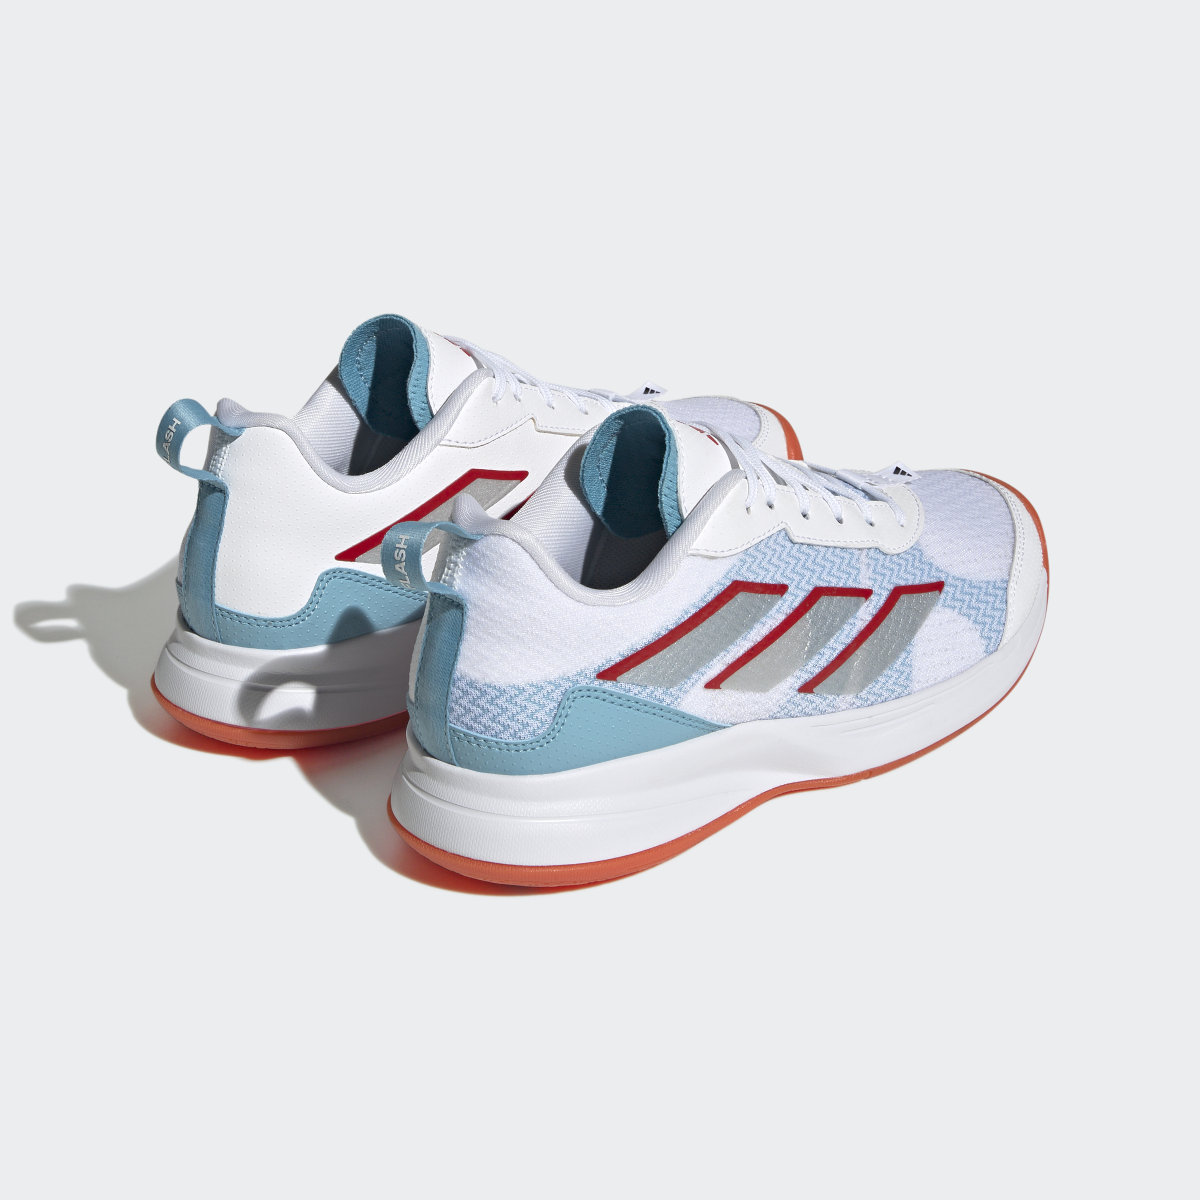 Adidas Avaflash Low Tennis Shoes. 6